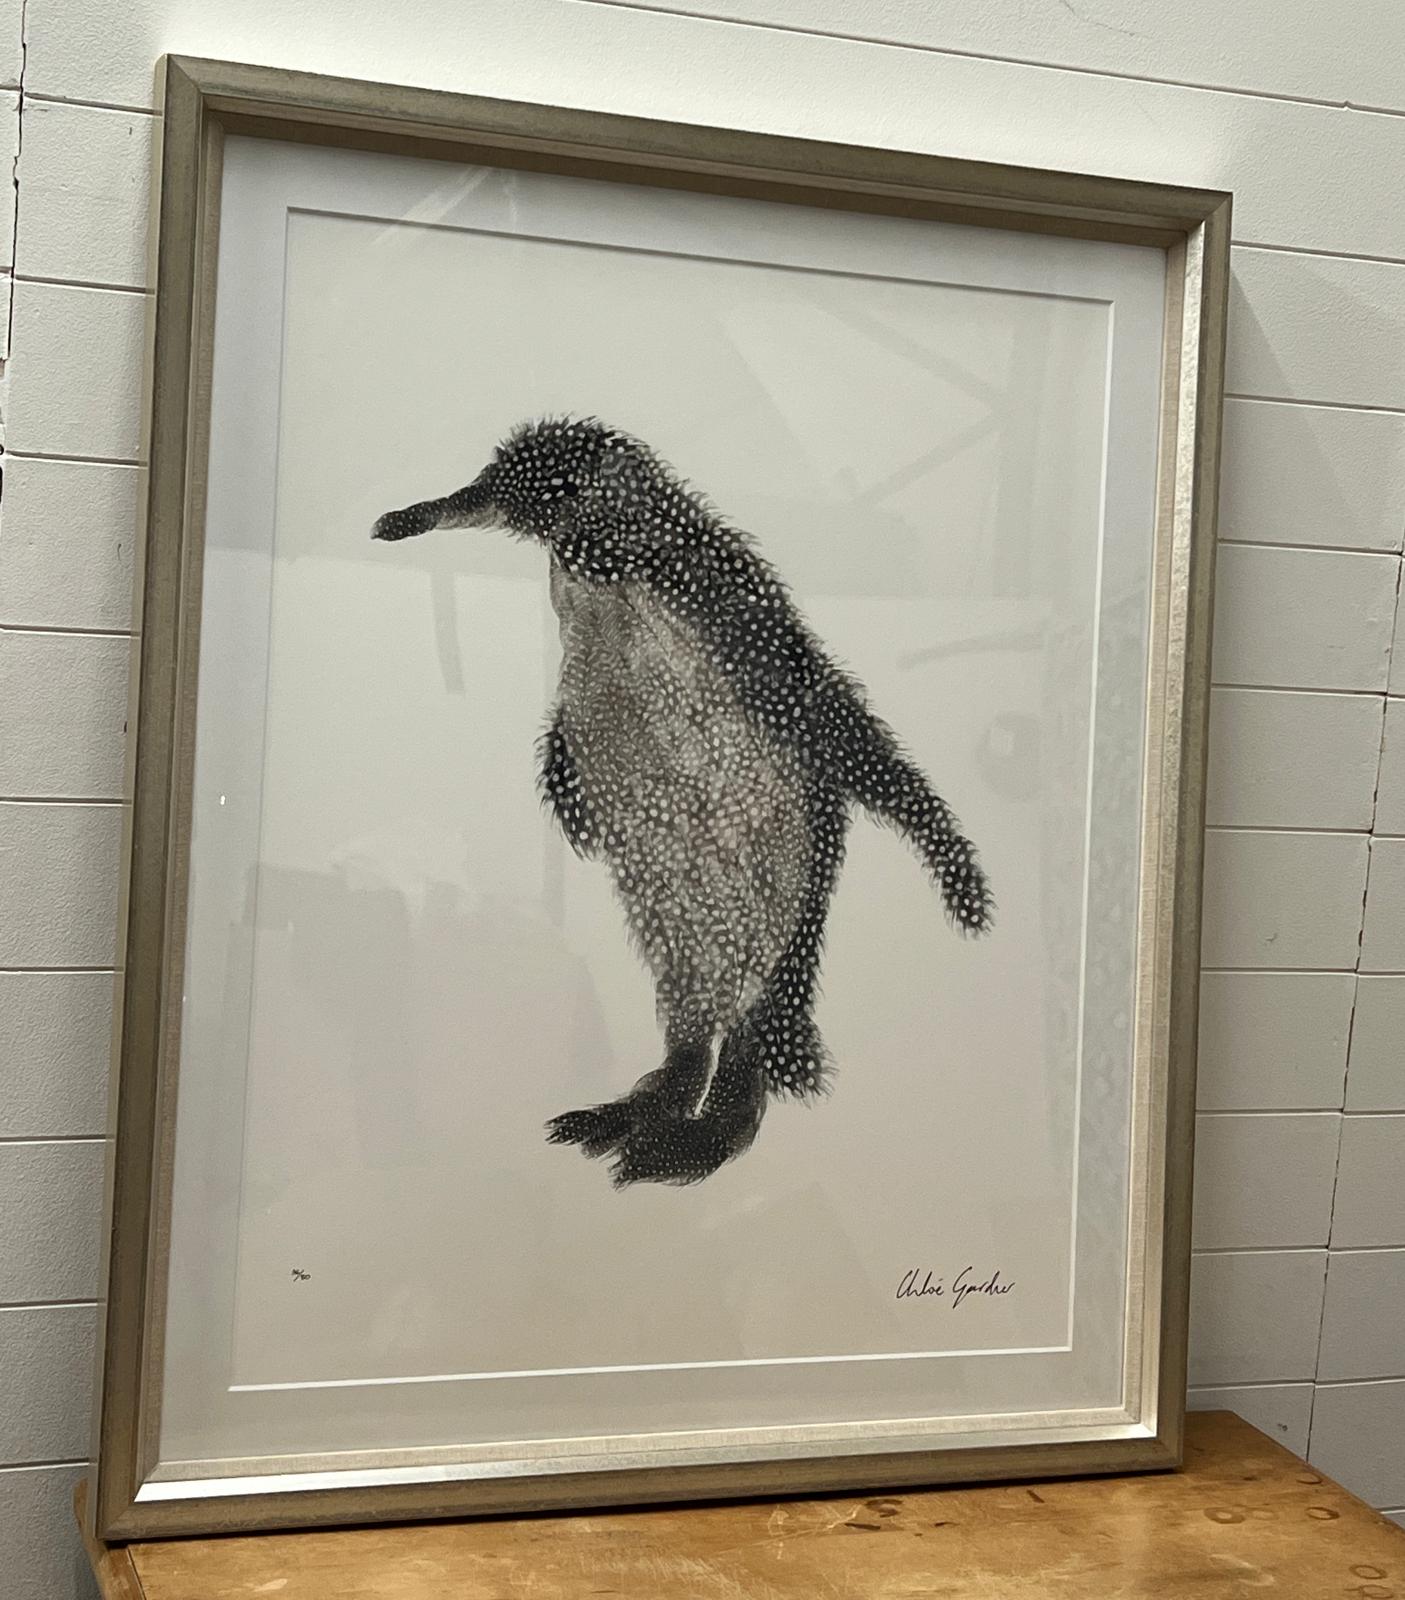 A Giclee print by Chloe Gardner "Penguin" 36/50 signed lower right (68cm x 50cm)